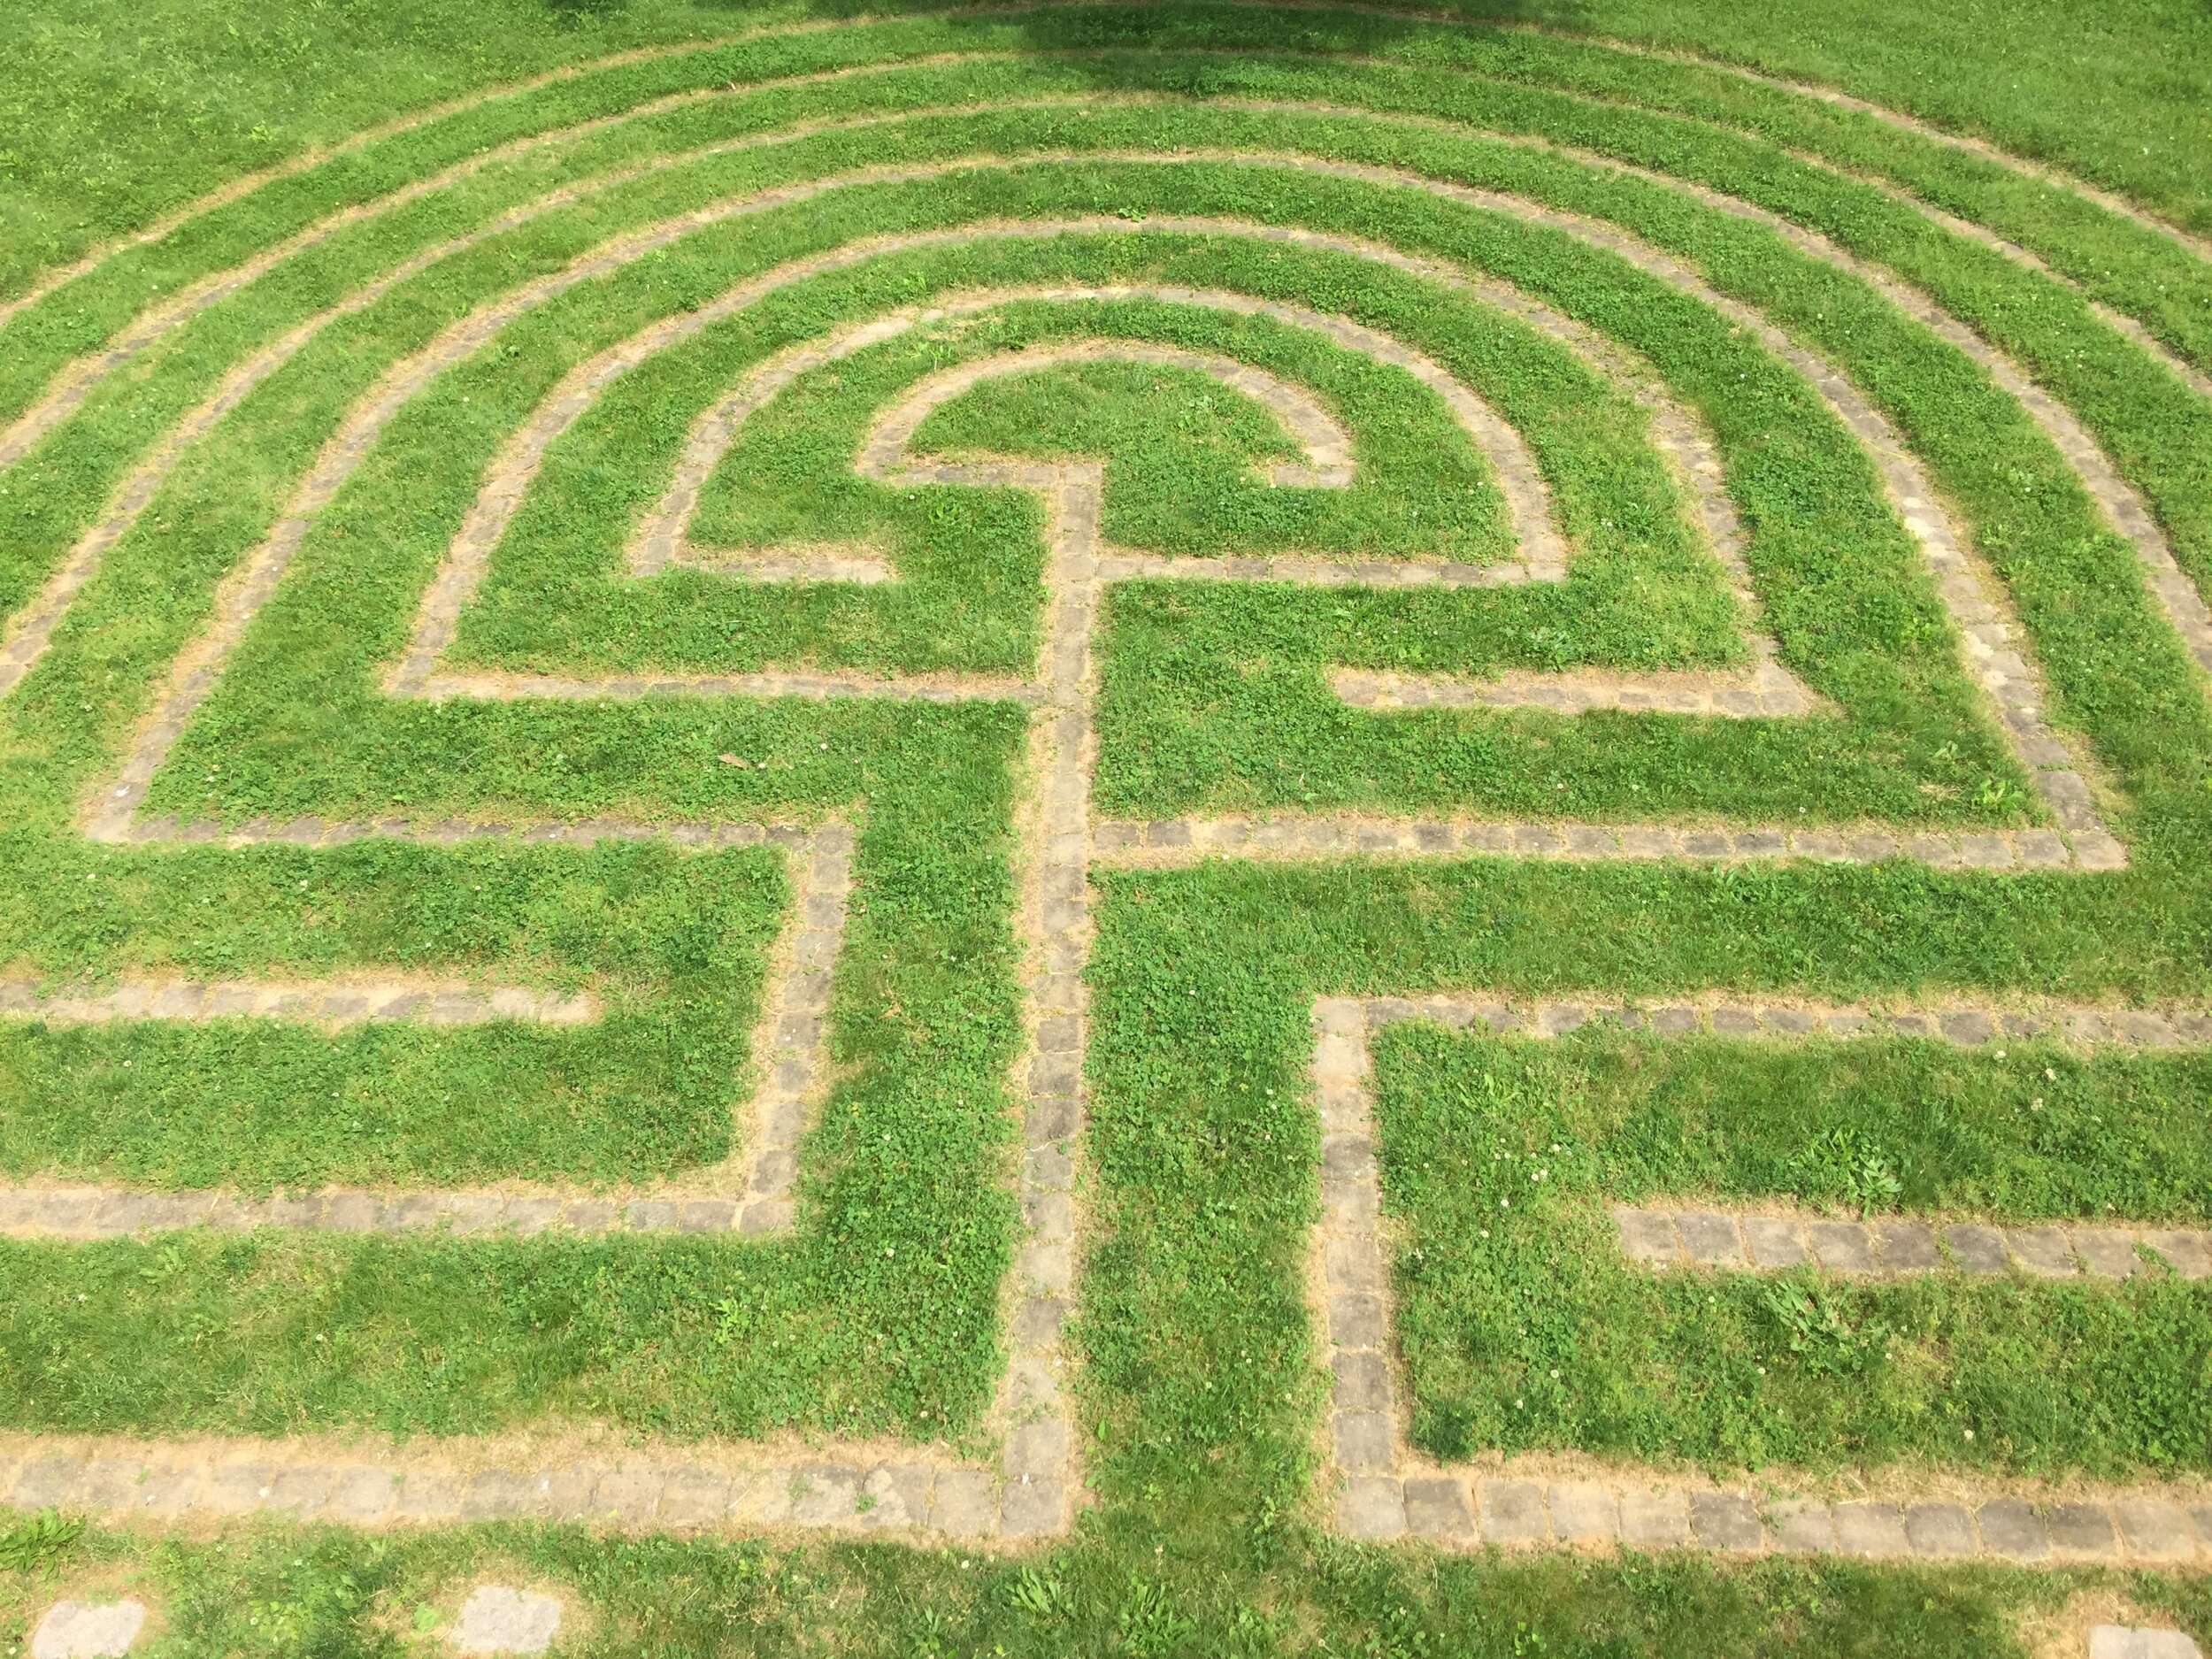 Labyrinth Colin Sinclair Pic.JPG